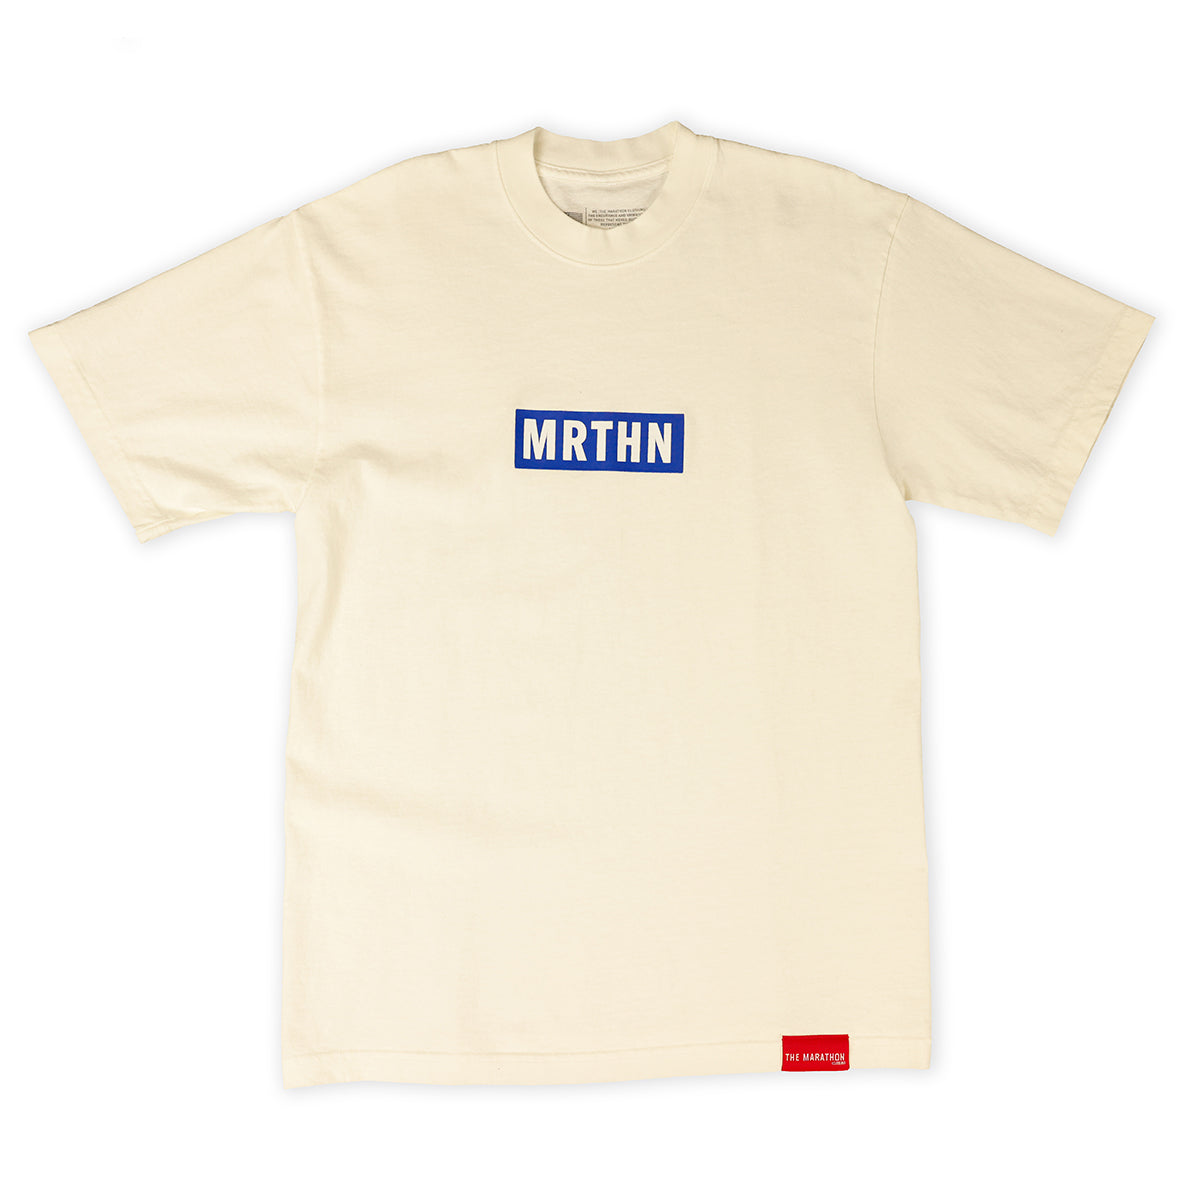 MRTHN T-shirt - Vintage White/Royal - Front